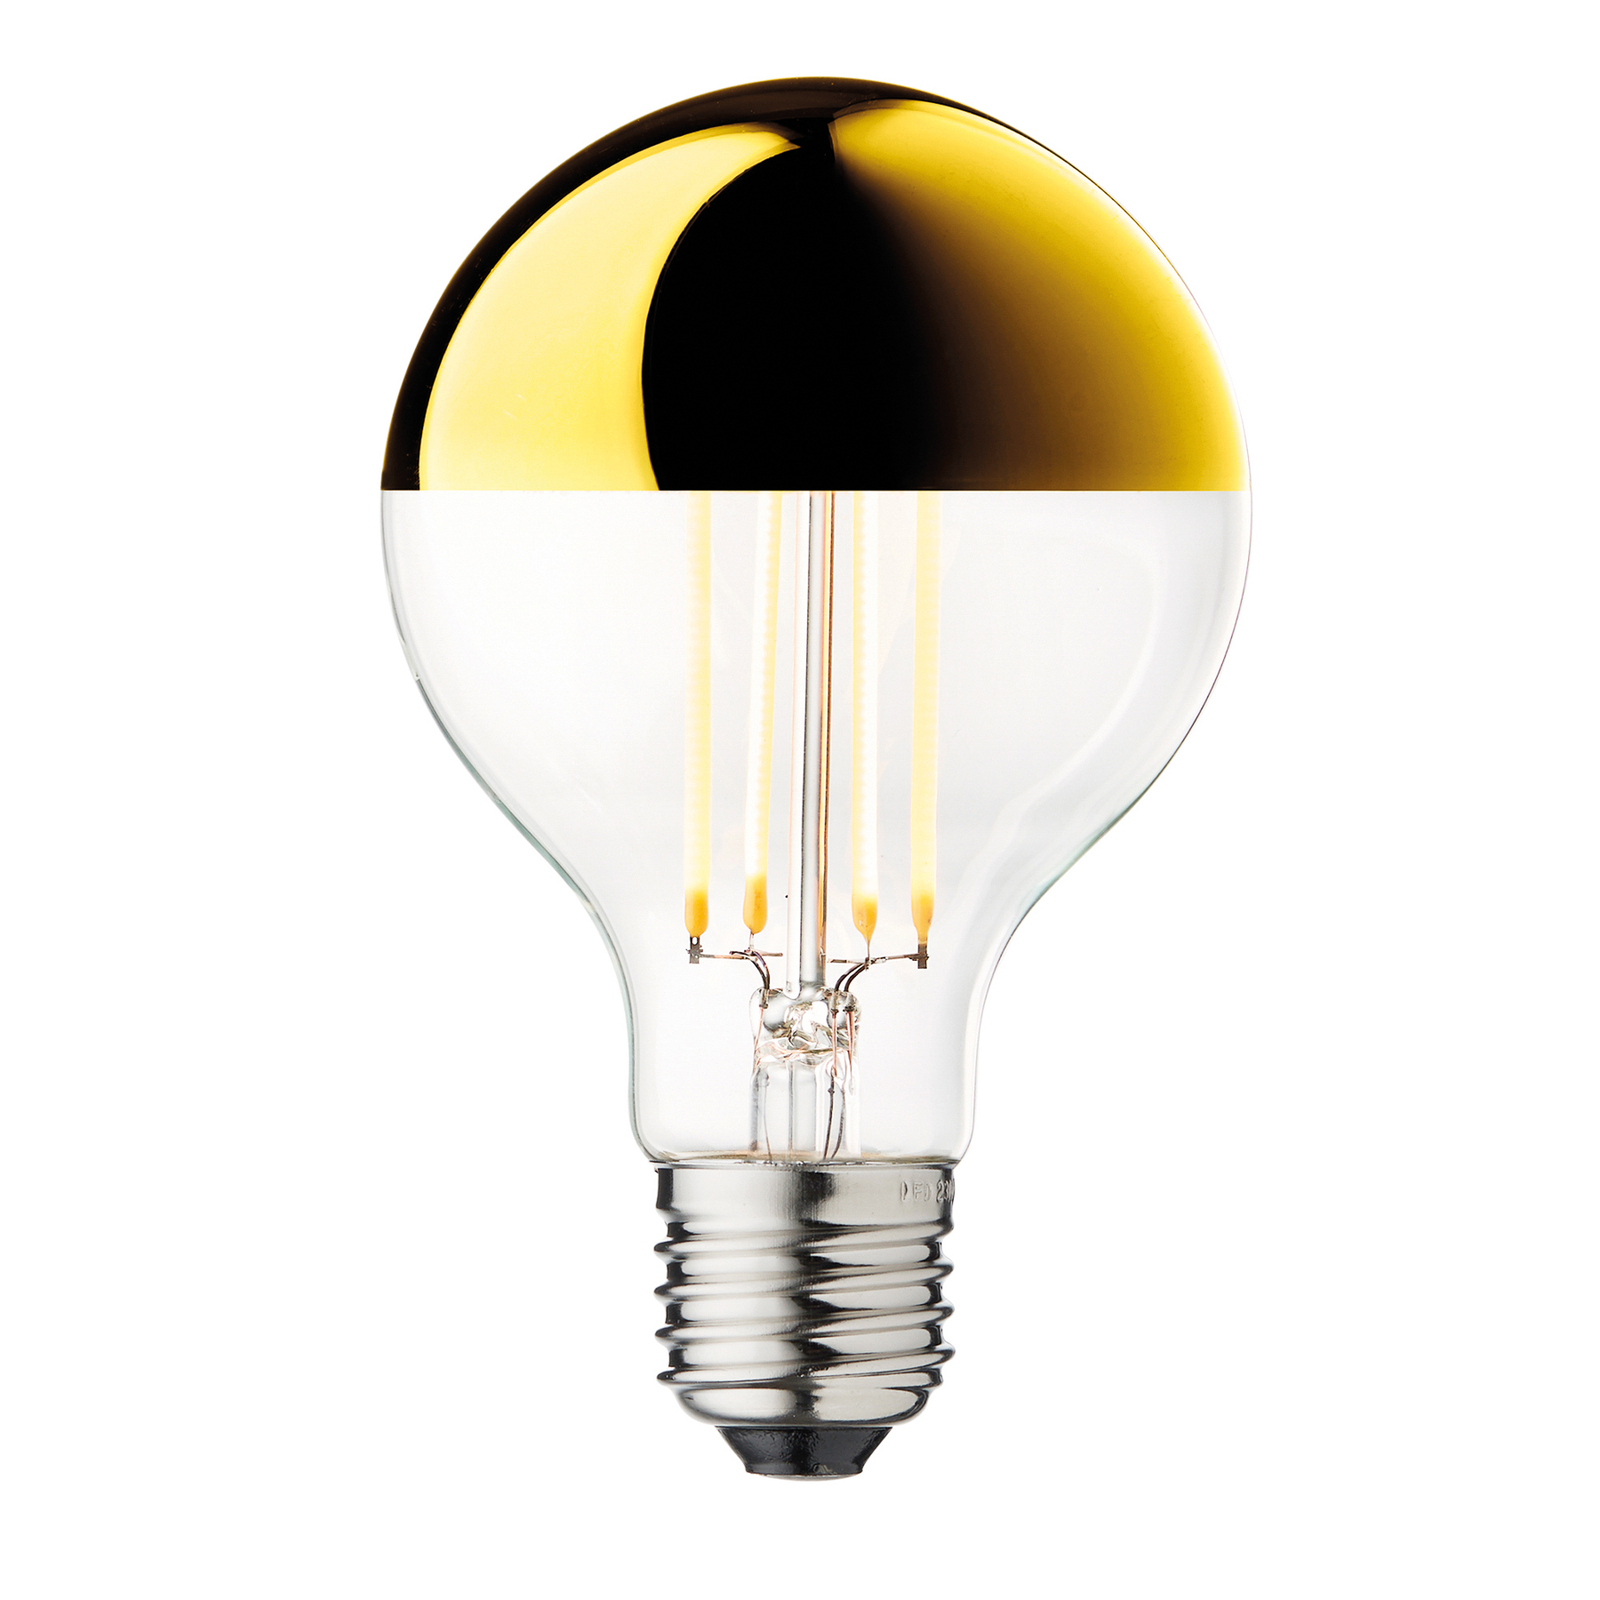 LED veidrodinė lempa "Globe 80", aukso spalvos, E27, 3,5 W, 2700 K